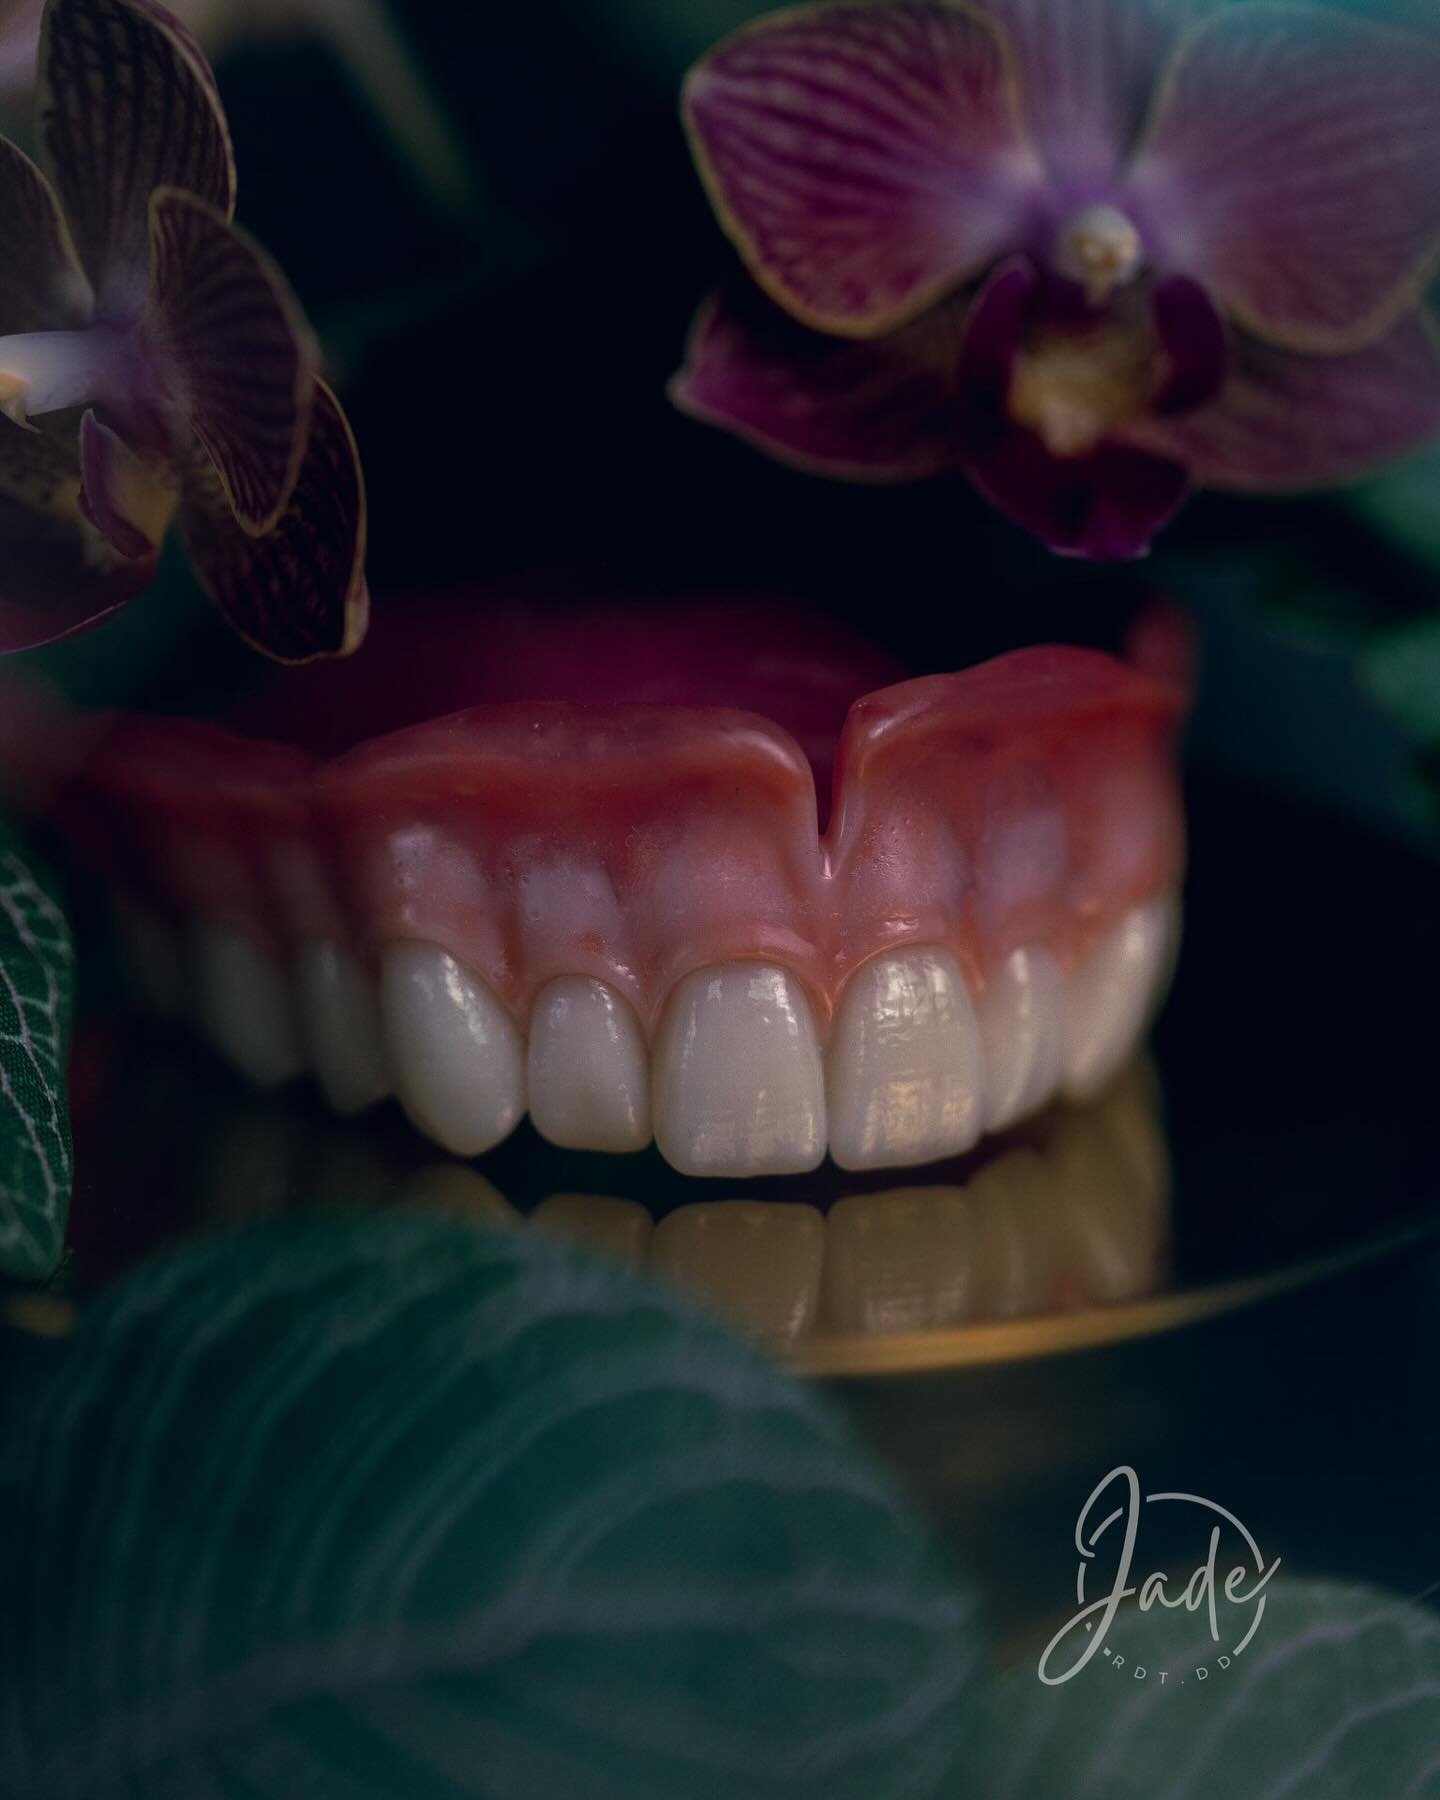 The beauty in nature 🌸
.
.
.
Wax: @candulor 
Teeth: @vitanorthamerica @vita Excel + Physiodens
Photo + Maker: @jade.rdtdd 
.
.
.
#dentures #denturelab #denturist #dentalart #dentallabtech #dentallabtechnician #prosthetic #acrylicart #canon100mmmacro